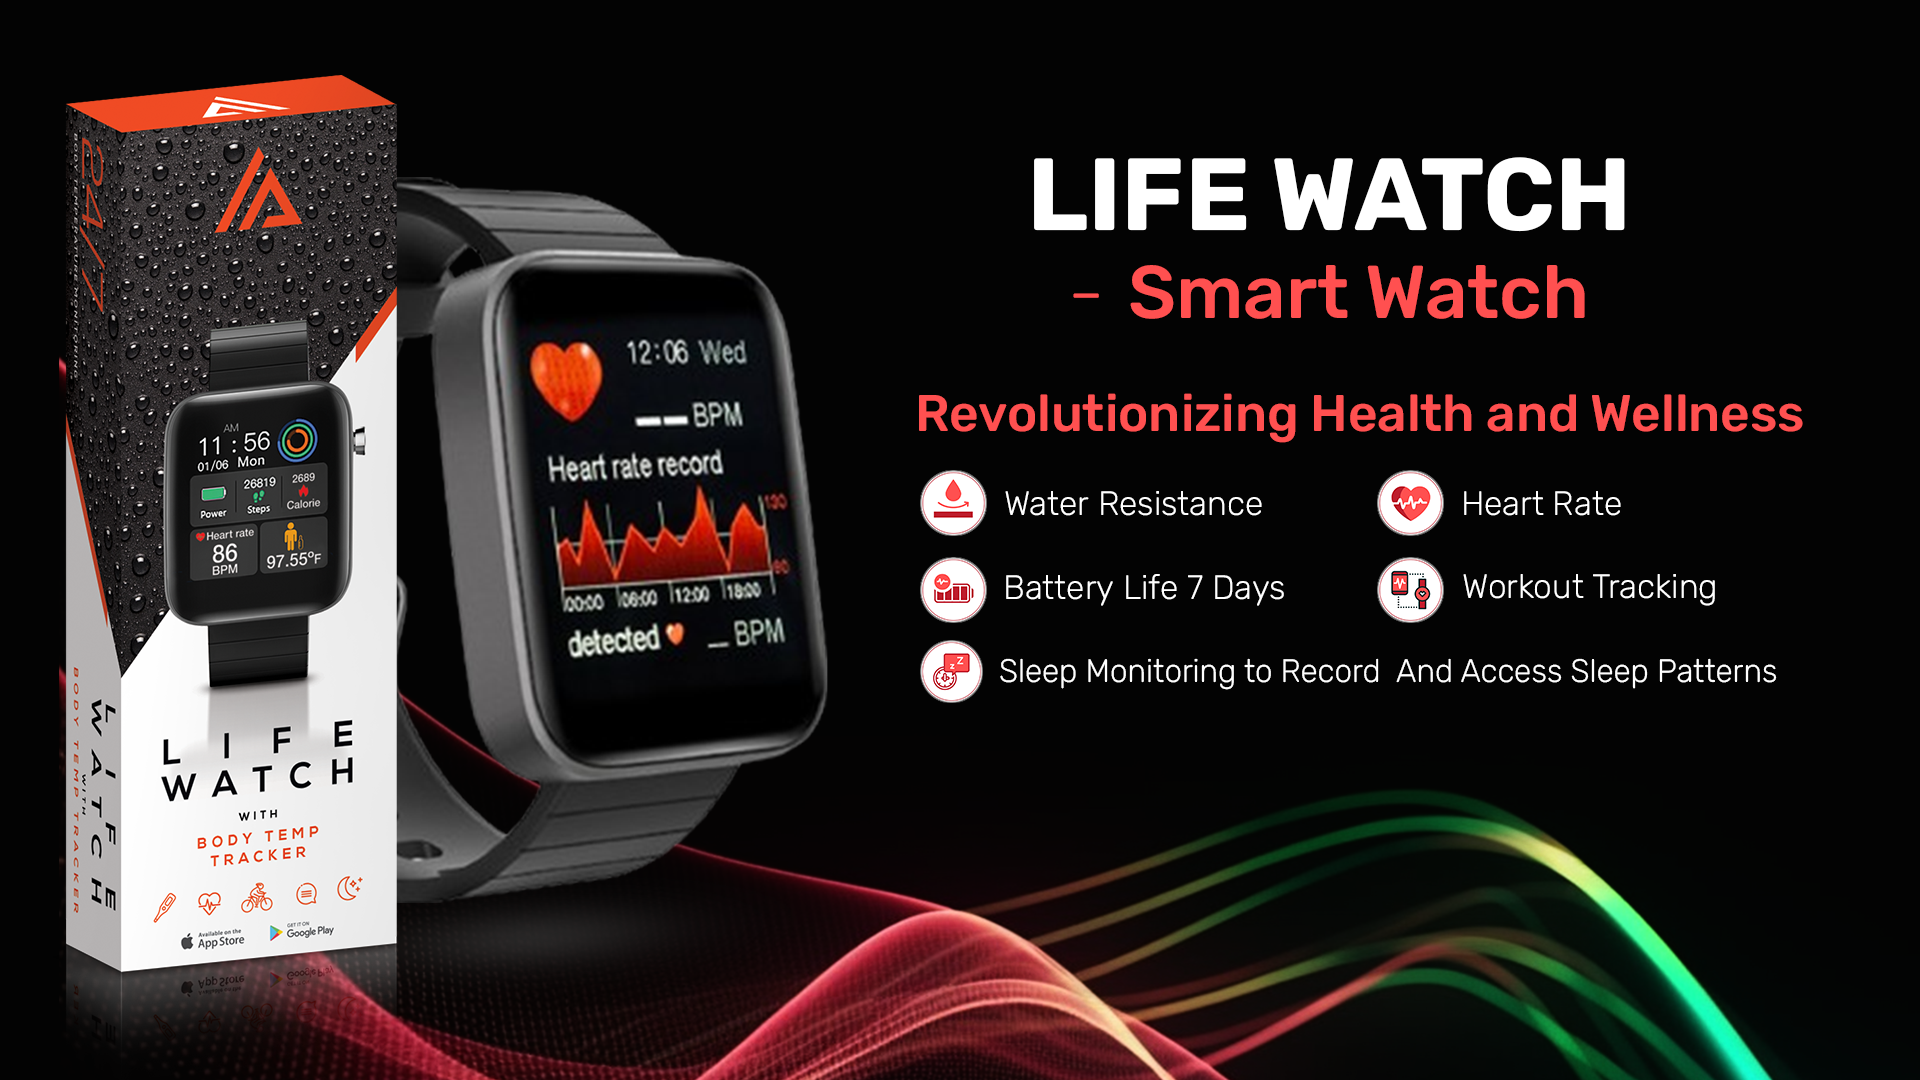 LifeWatch Smart Watch: Revolutionizing Health and Wellness